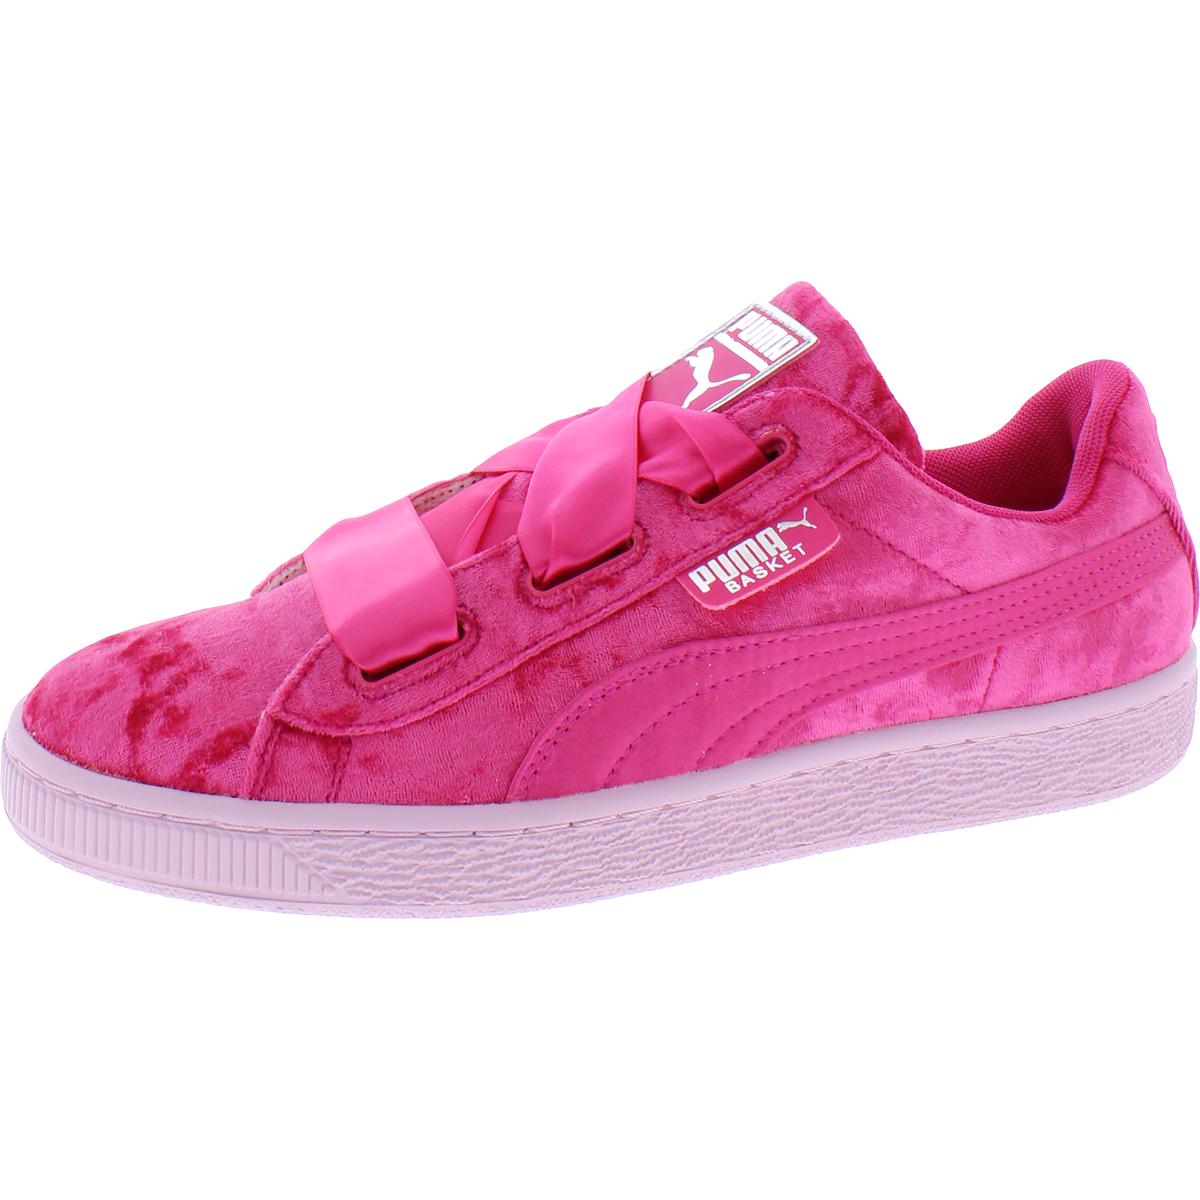 Puma Girls Basket Heart Velour Lifestyle Fashion Sneakers Shoes BHFO ...